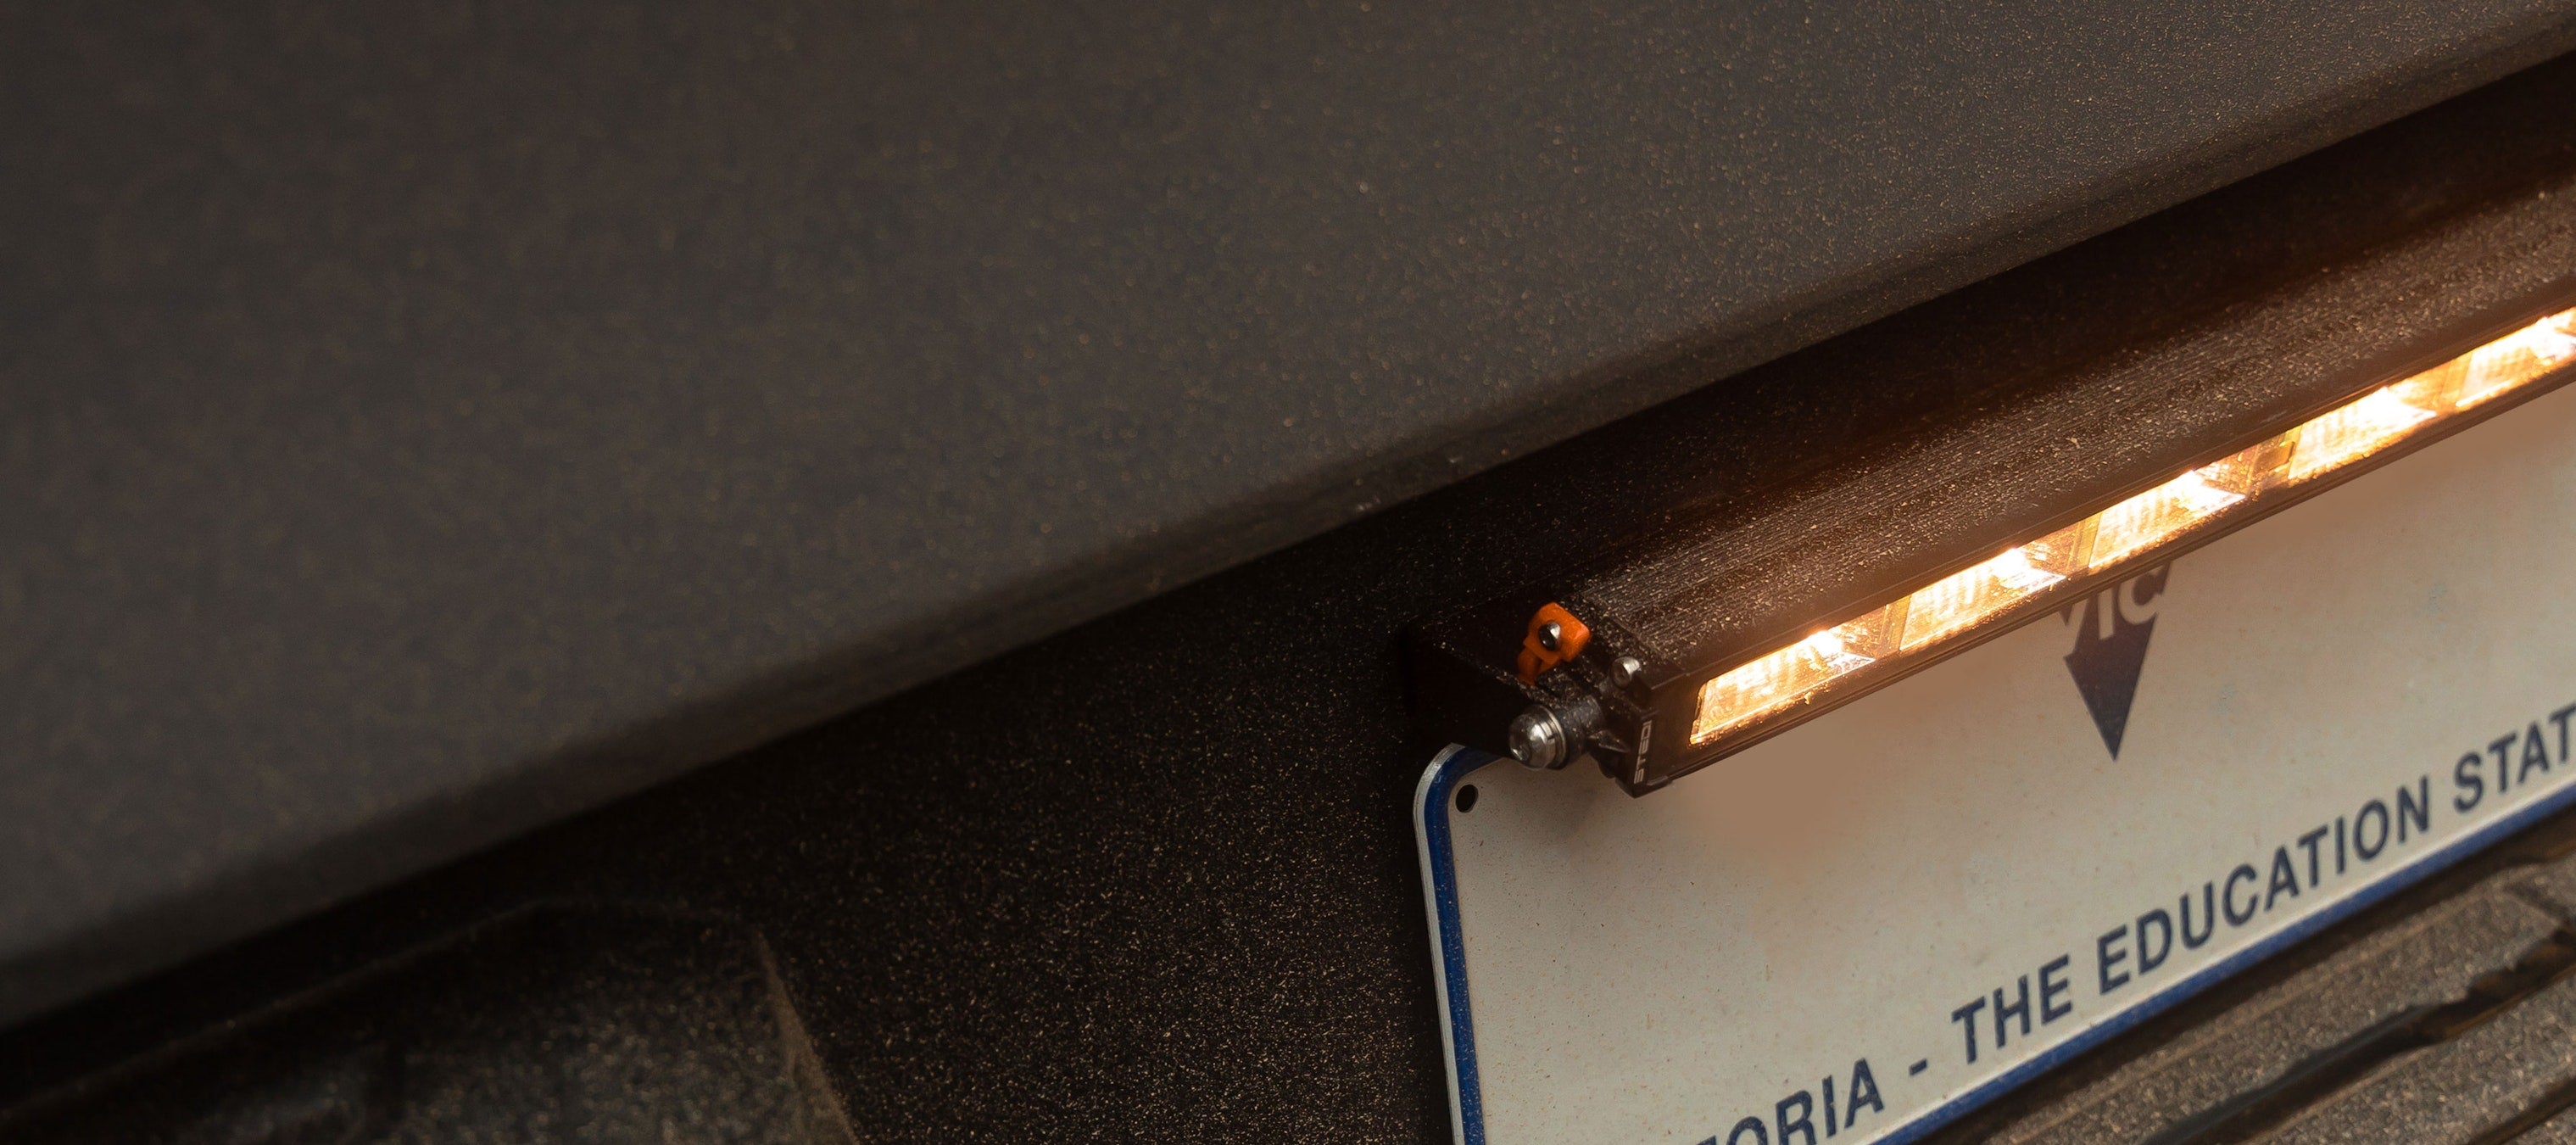 STEDI Kennzeichenhalter für Micro V2 LED Light Bar 13,9 Zoll